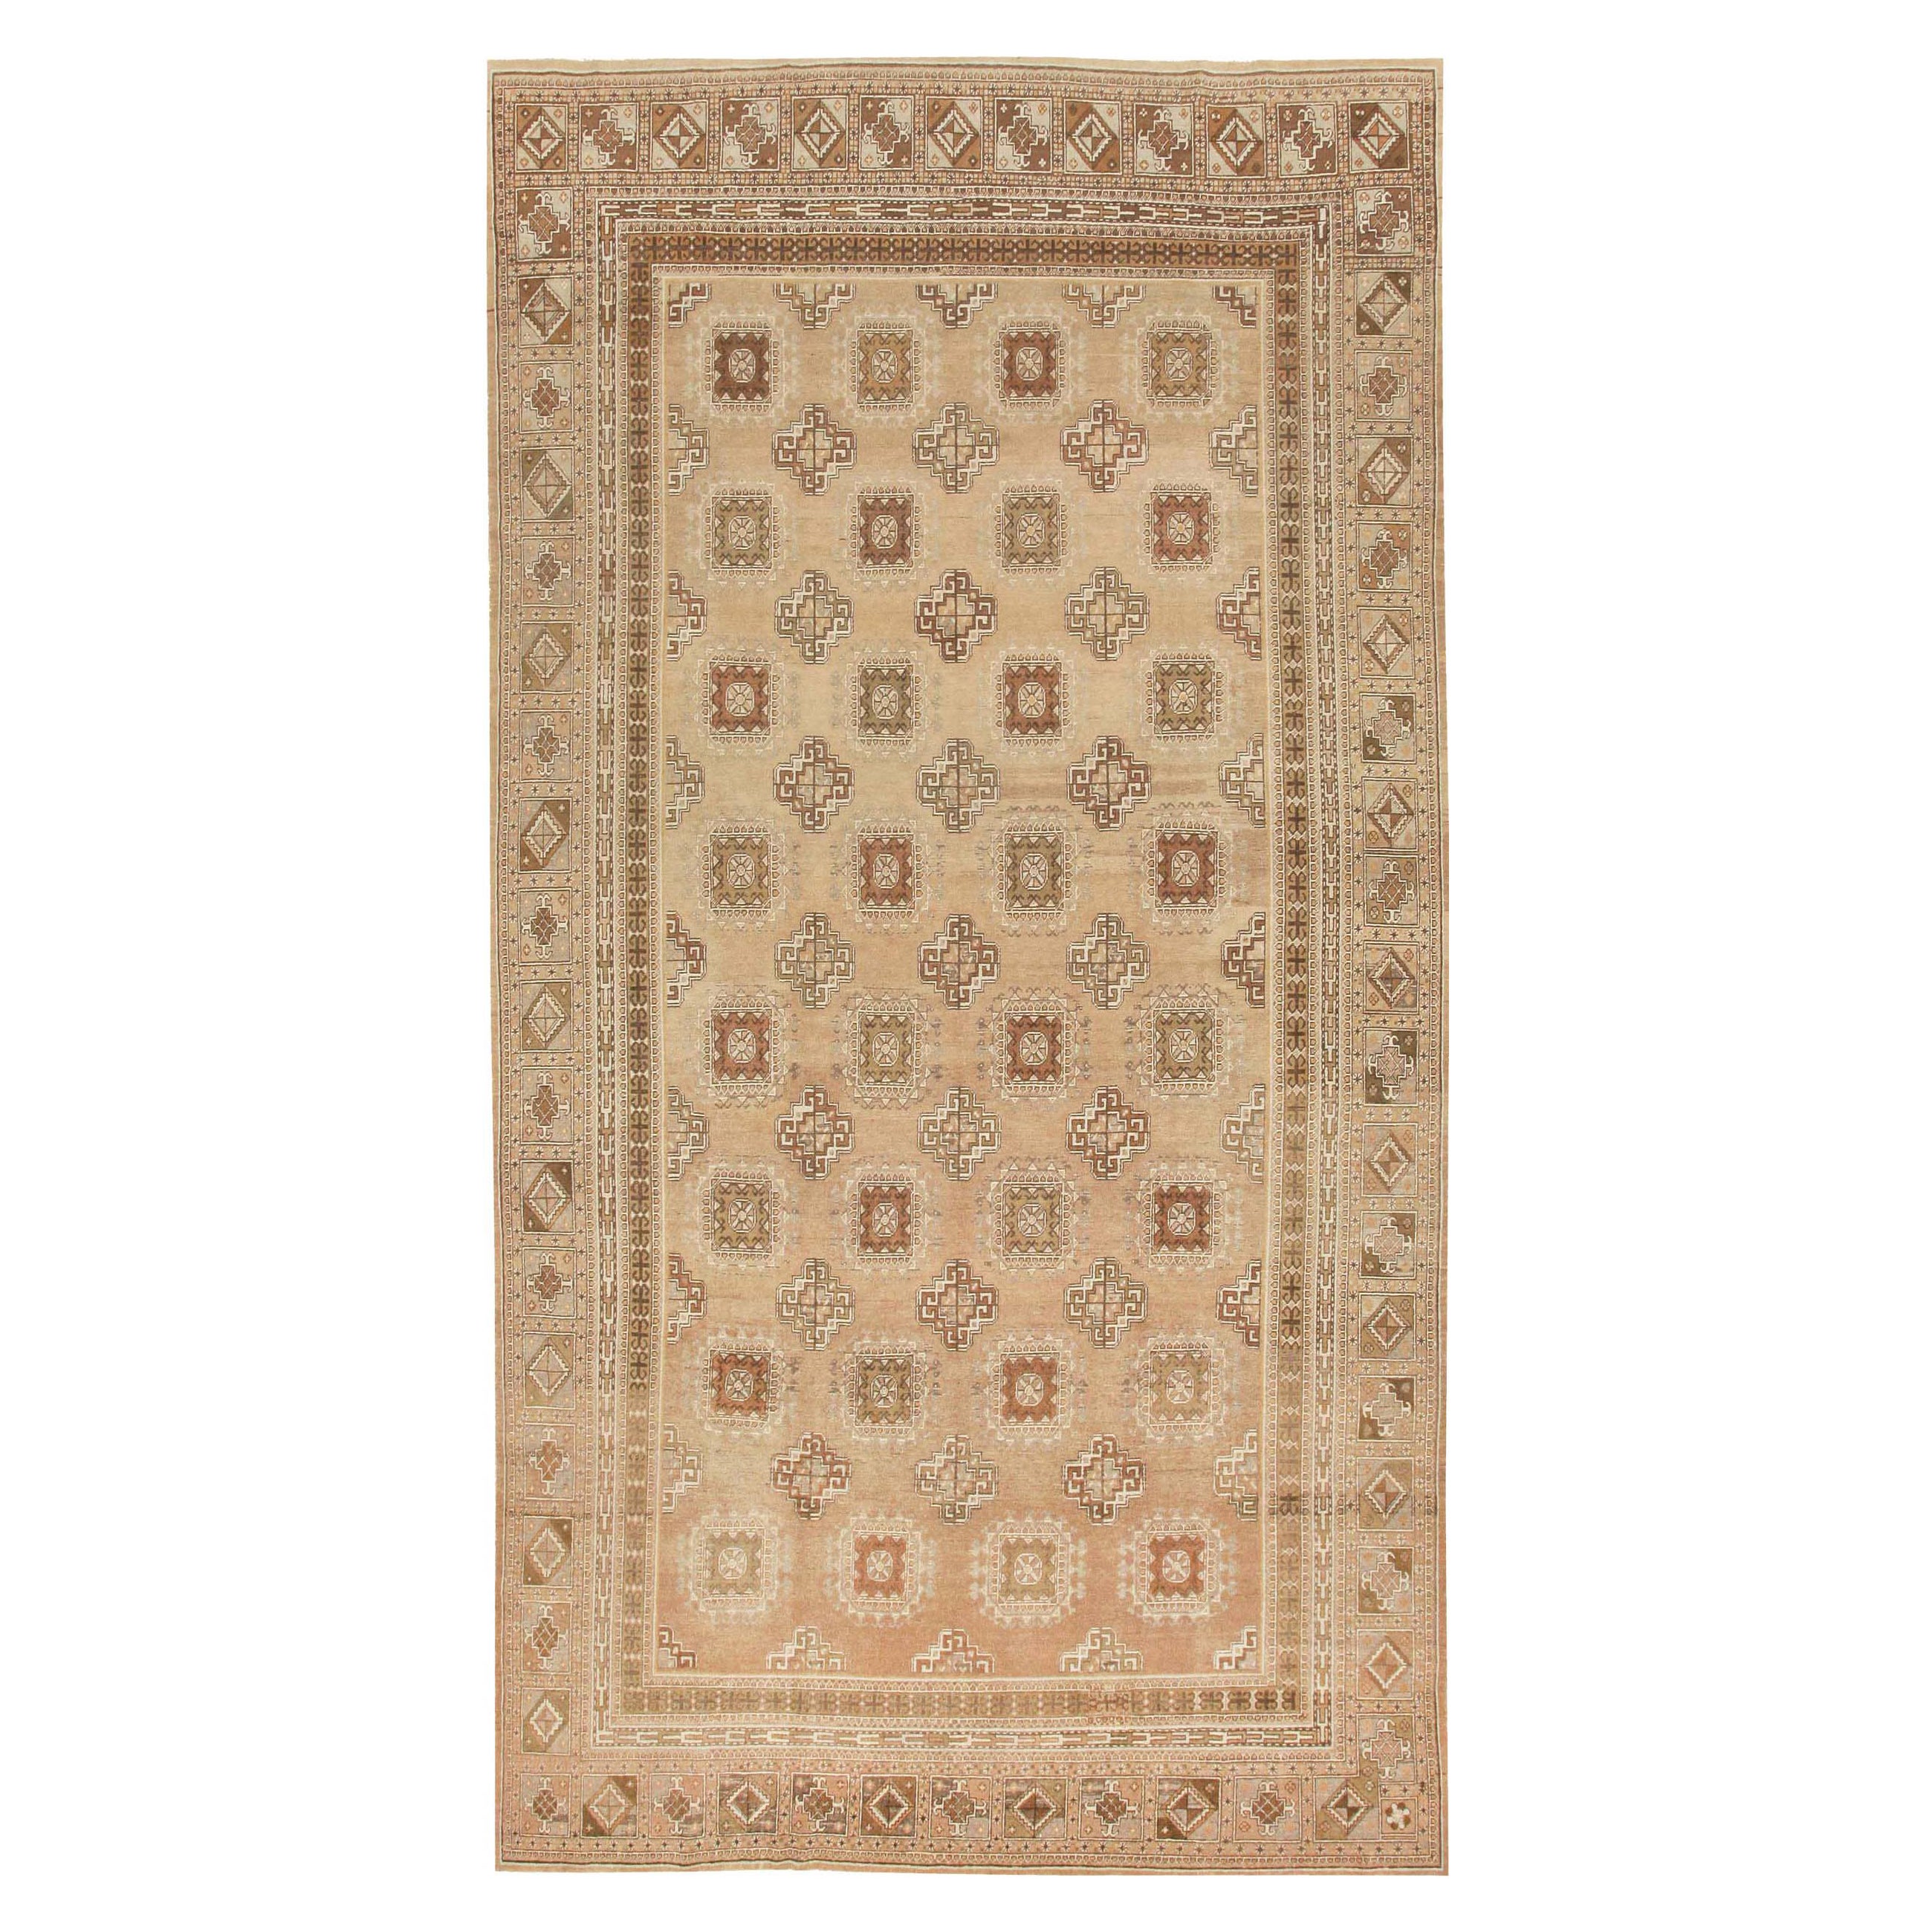 Antique Khotan Carpet. Size: 9 ft x 17 ft 2 in For Sale